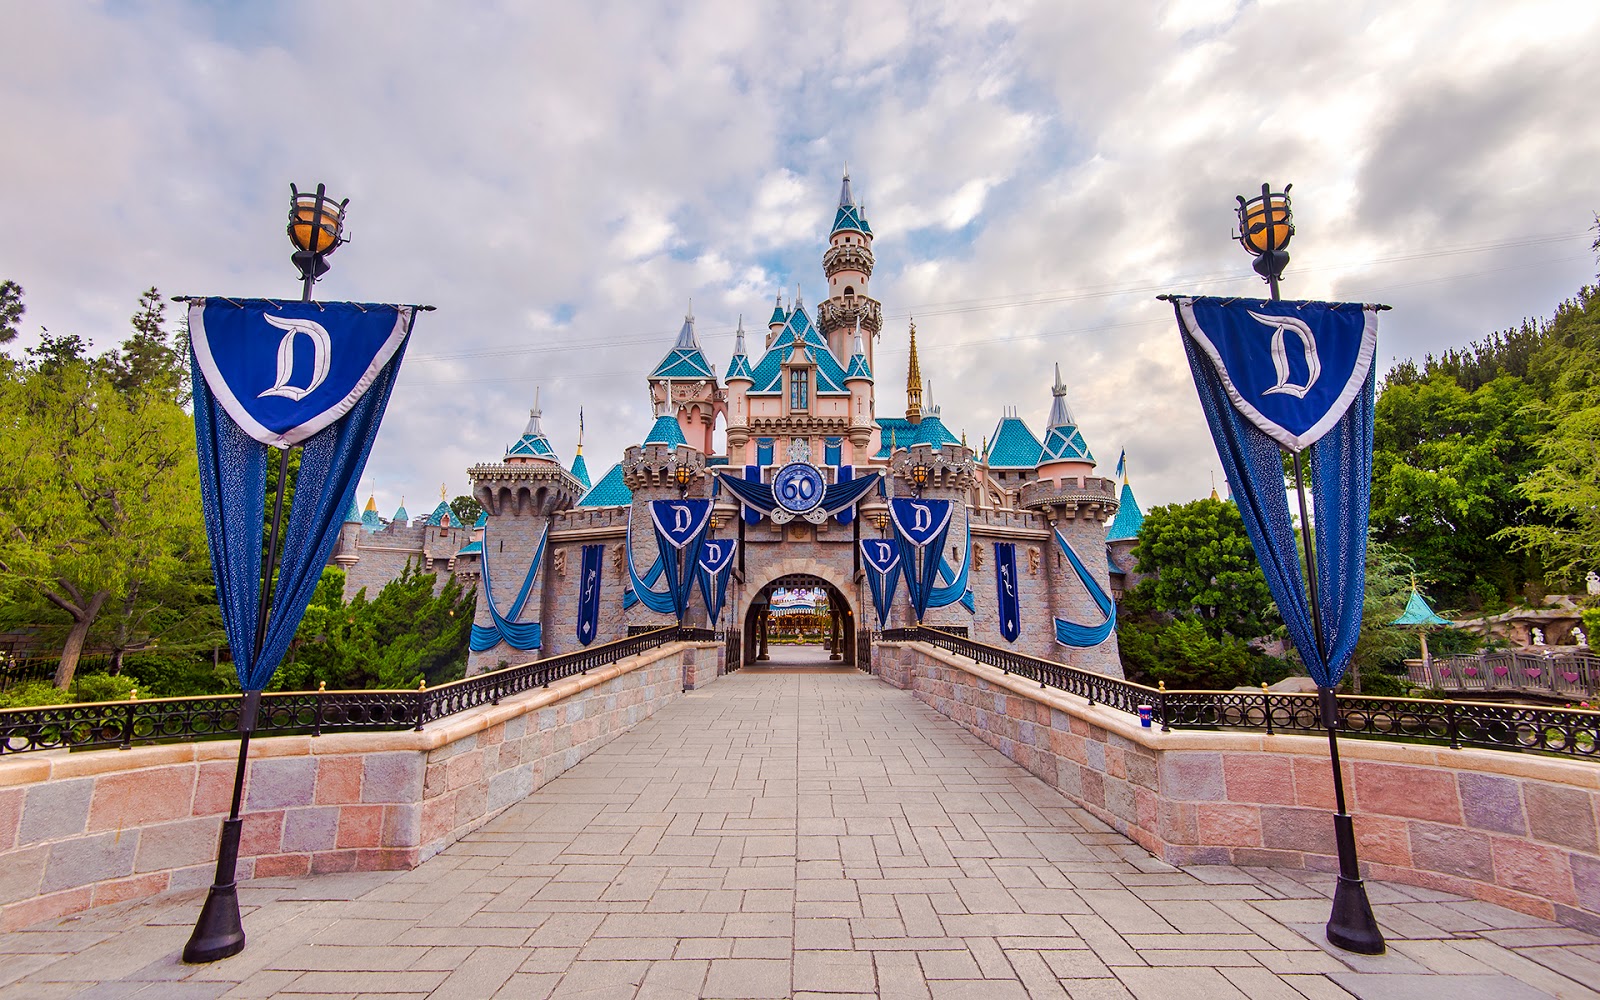 Disneyland Sleeping Beauty Castle 2015